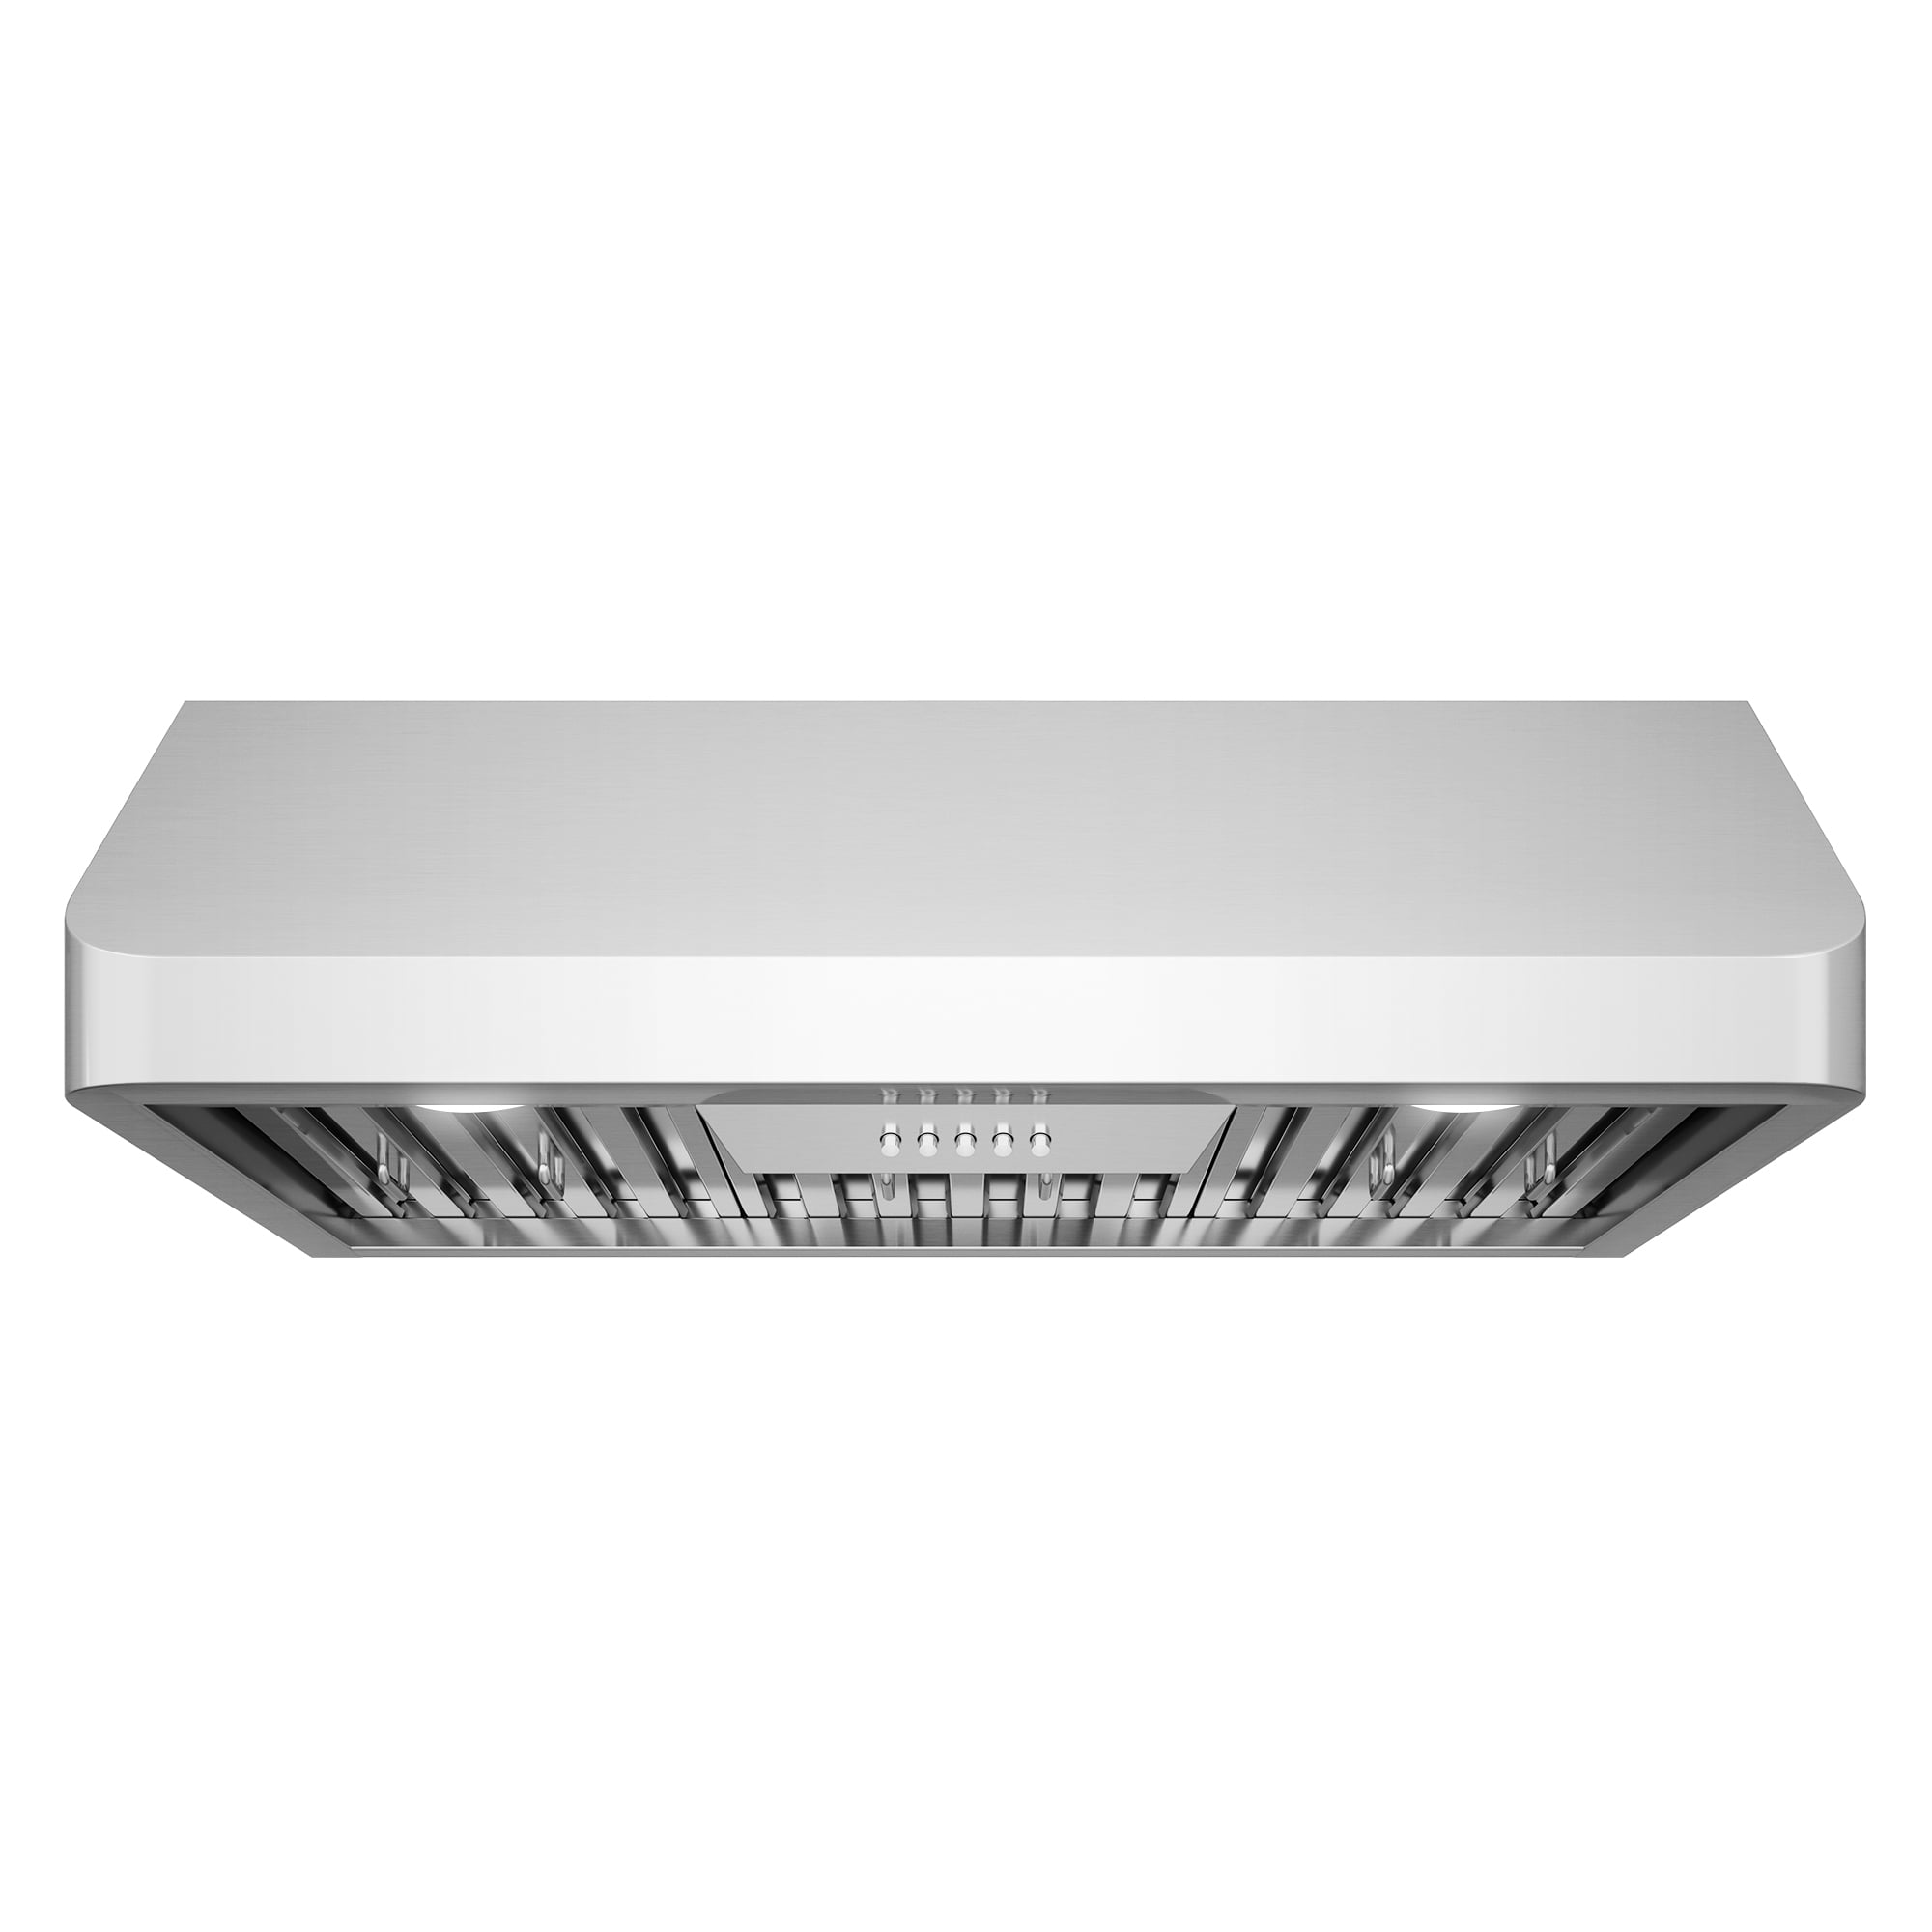 VIVOHOME 30 inch Under Cabinet Range Hood with LED Lights for Kitchen, 800CFM, Size: 30 x 22 x 8, Silver